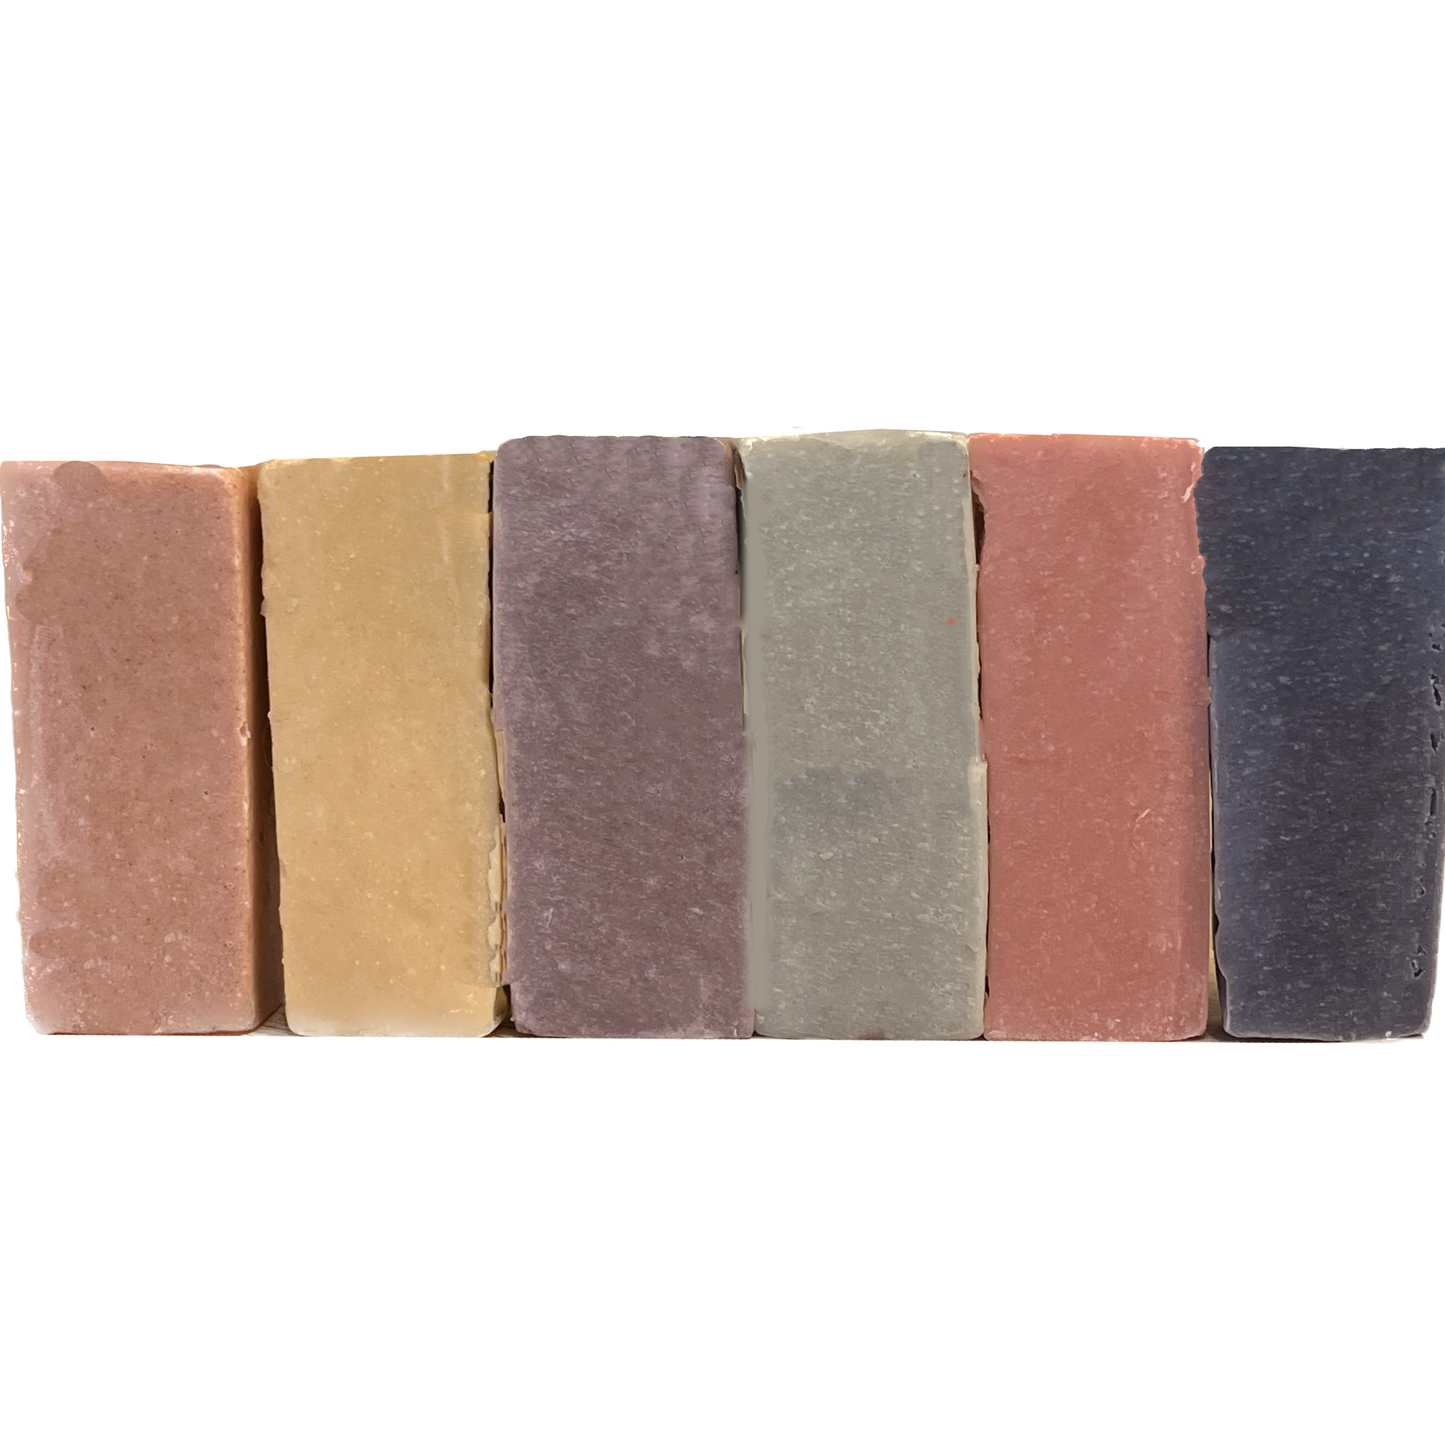 Soap Dough Co. - Earth Kit - Wall of sienna brown, desert green, dark purple, brown/orange, salmon pink, and gold.